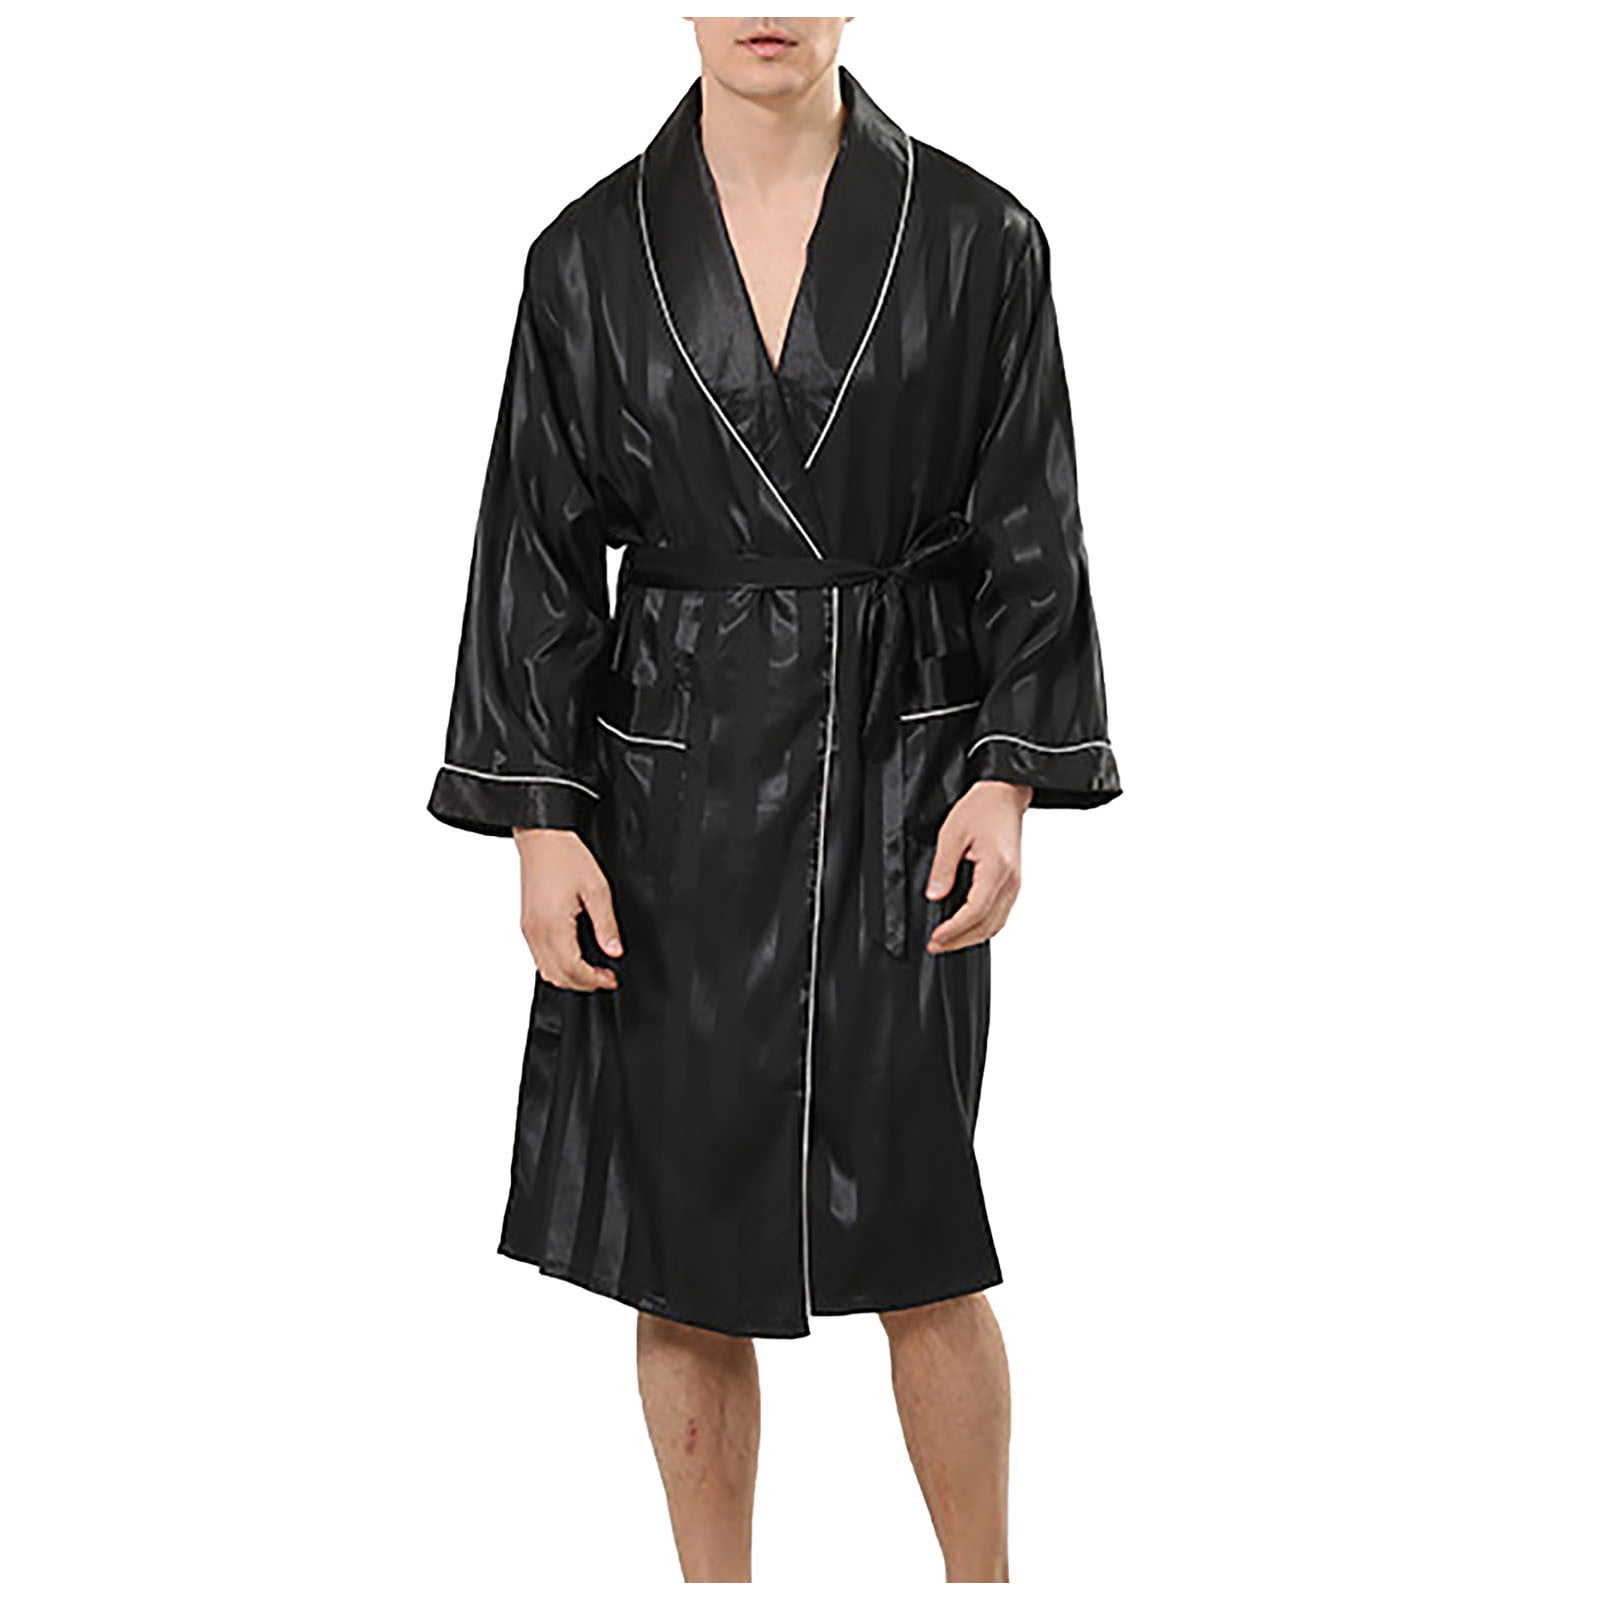 Men's Pajamas Set Fashion Robe Tops Pjs Shorts 2PC Suit Silk Long Cardigan  Sleepwear Homewear Loungewear Outfits